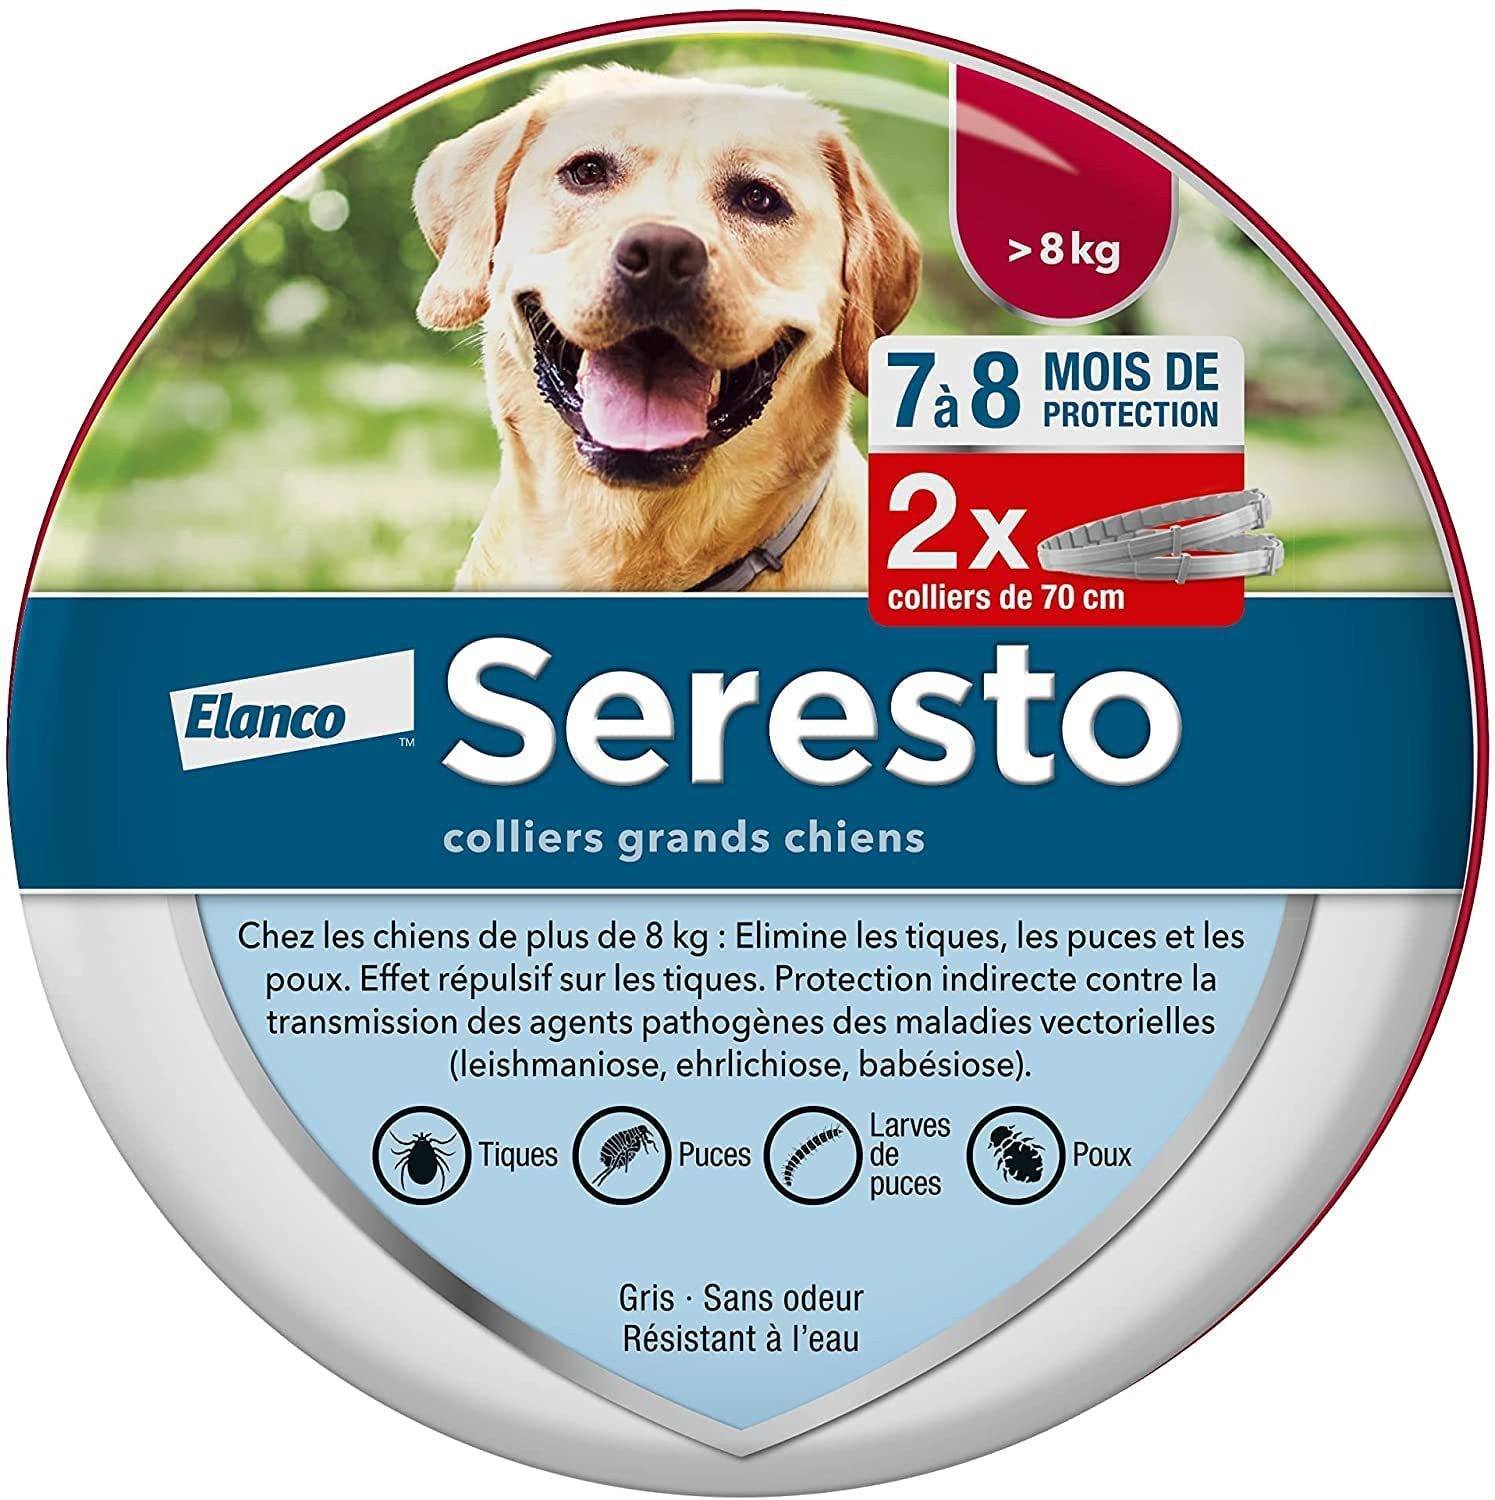 New Dog Cat Deworming Collar Seresto Soledo Bayer Bayer Flea Removal Cross-border Wish